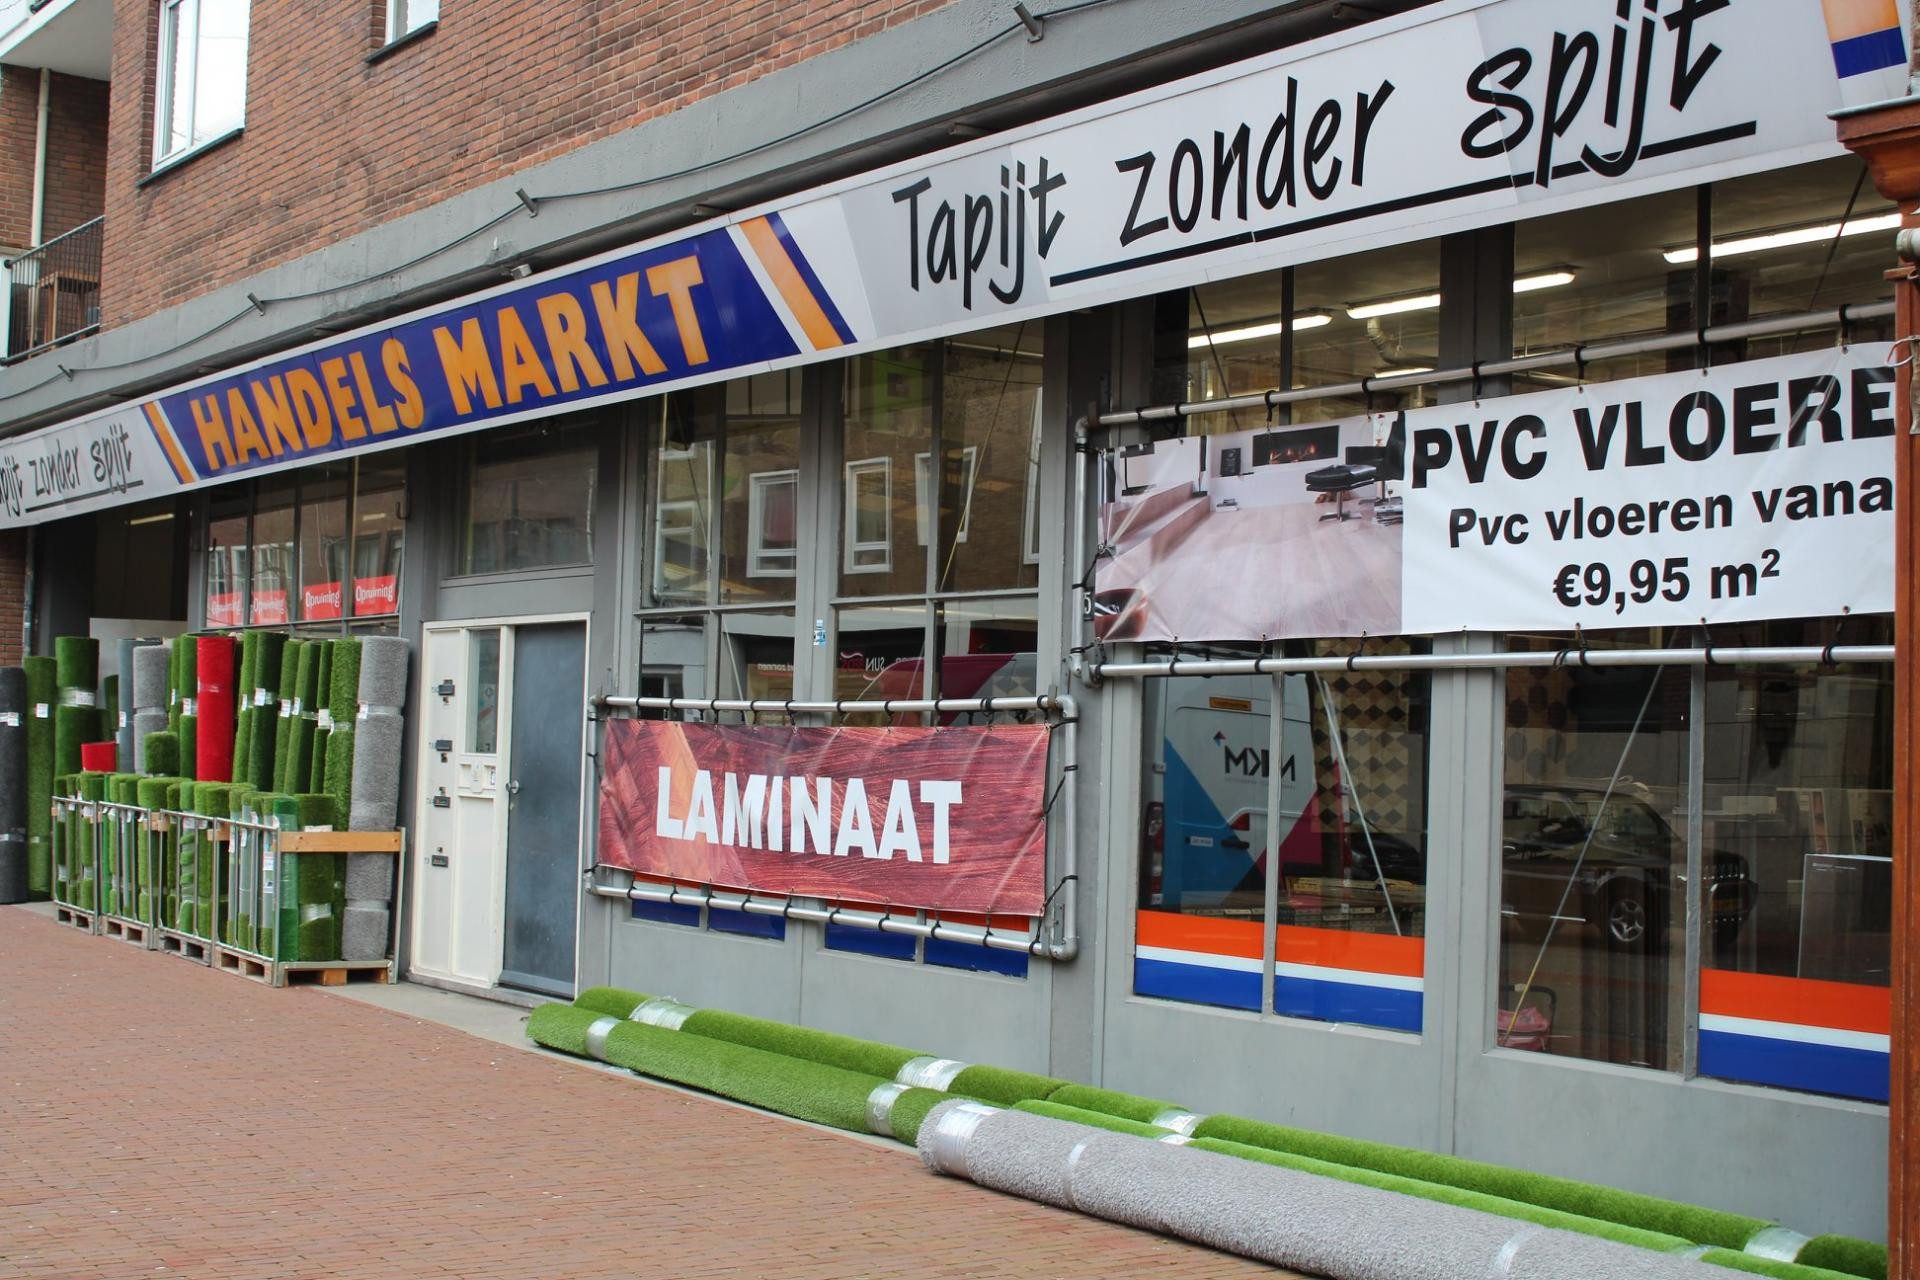 (c) Handelsmarktnijmegen.nl